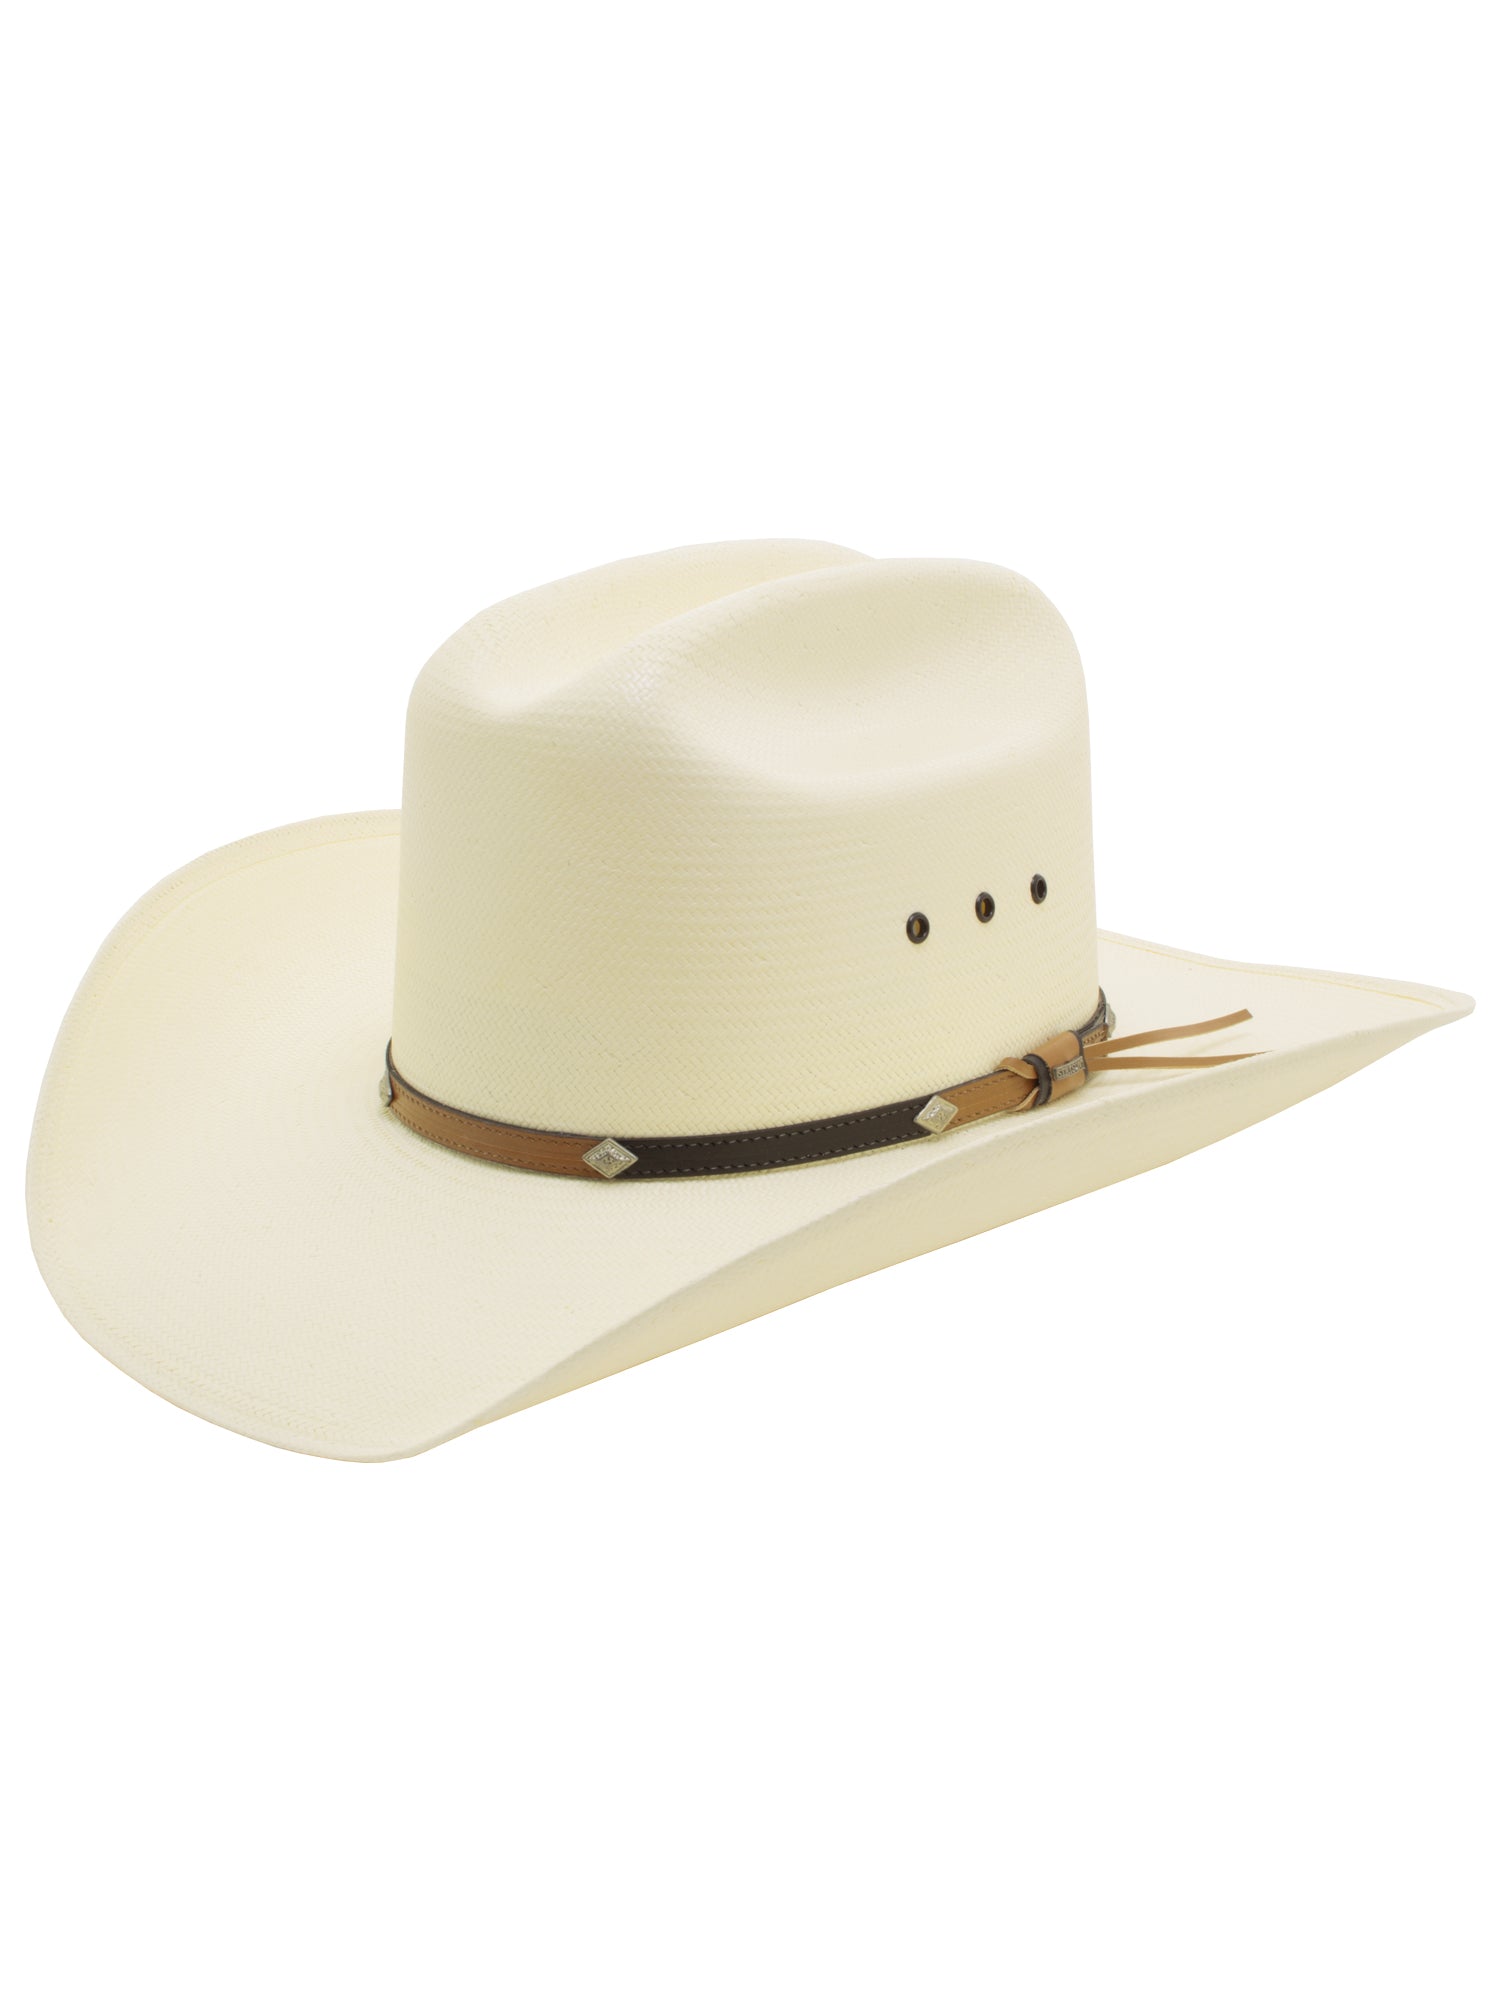 Stetson Grant Shantung Cowboy Hats